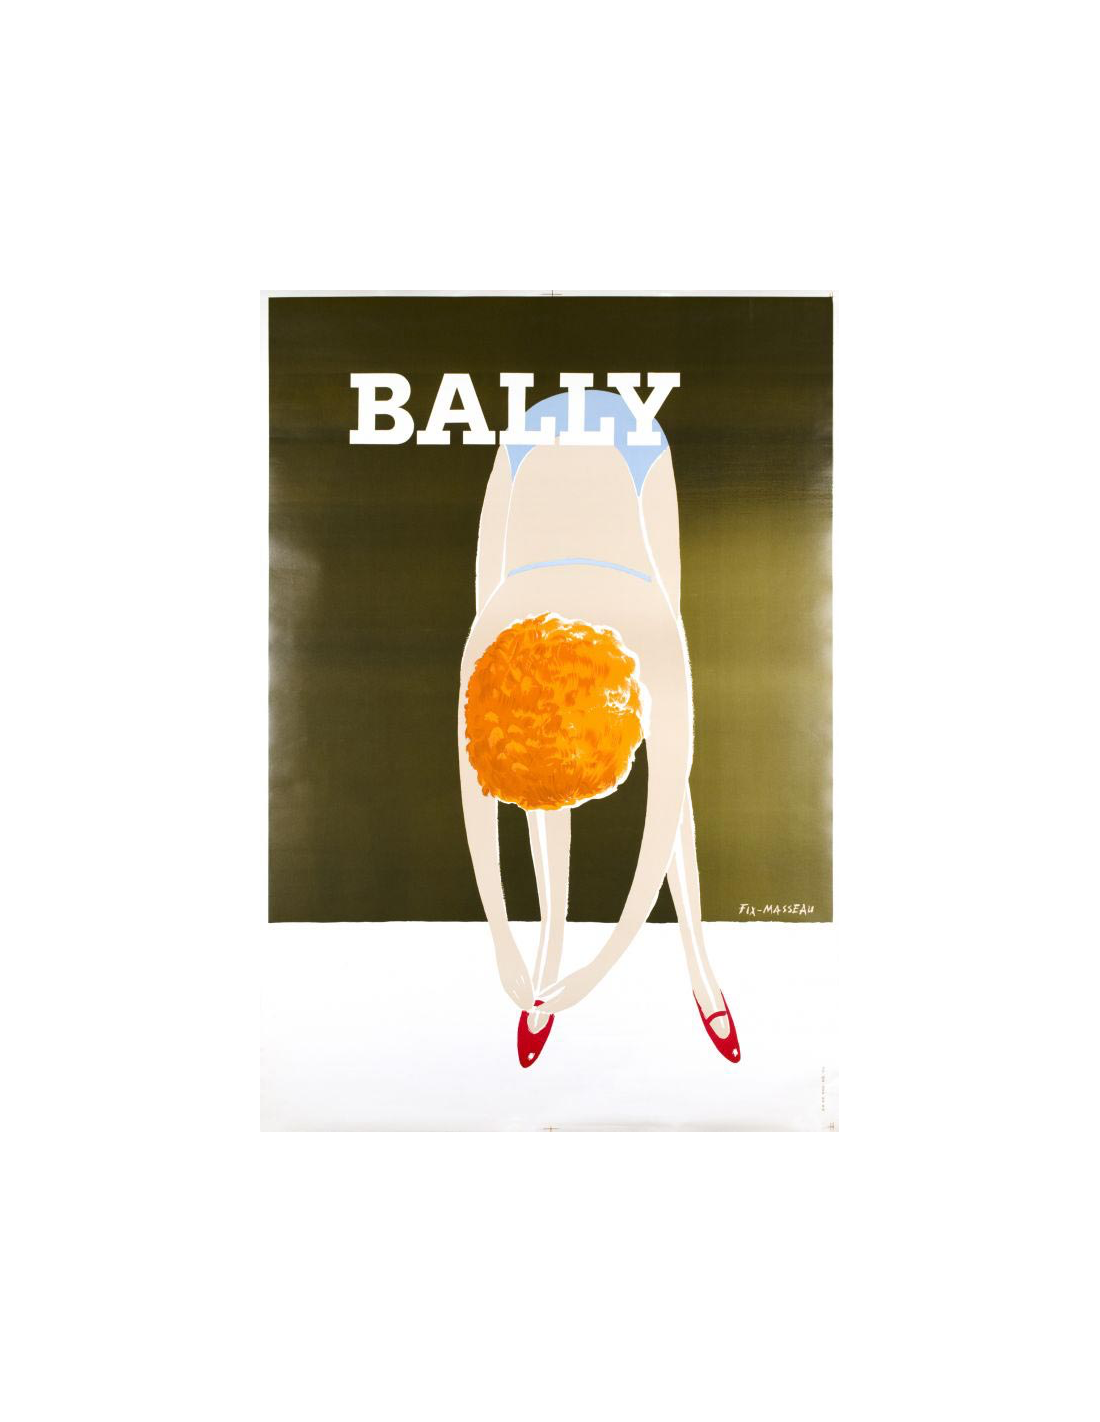 Bally by Fix Masseau 1985 original french poster